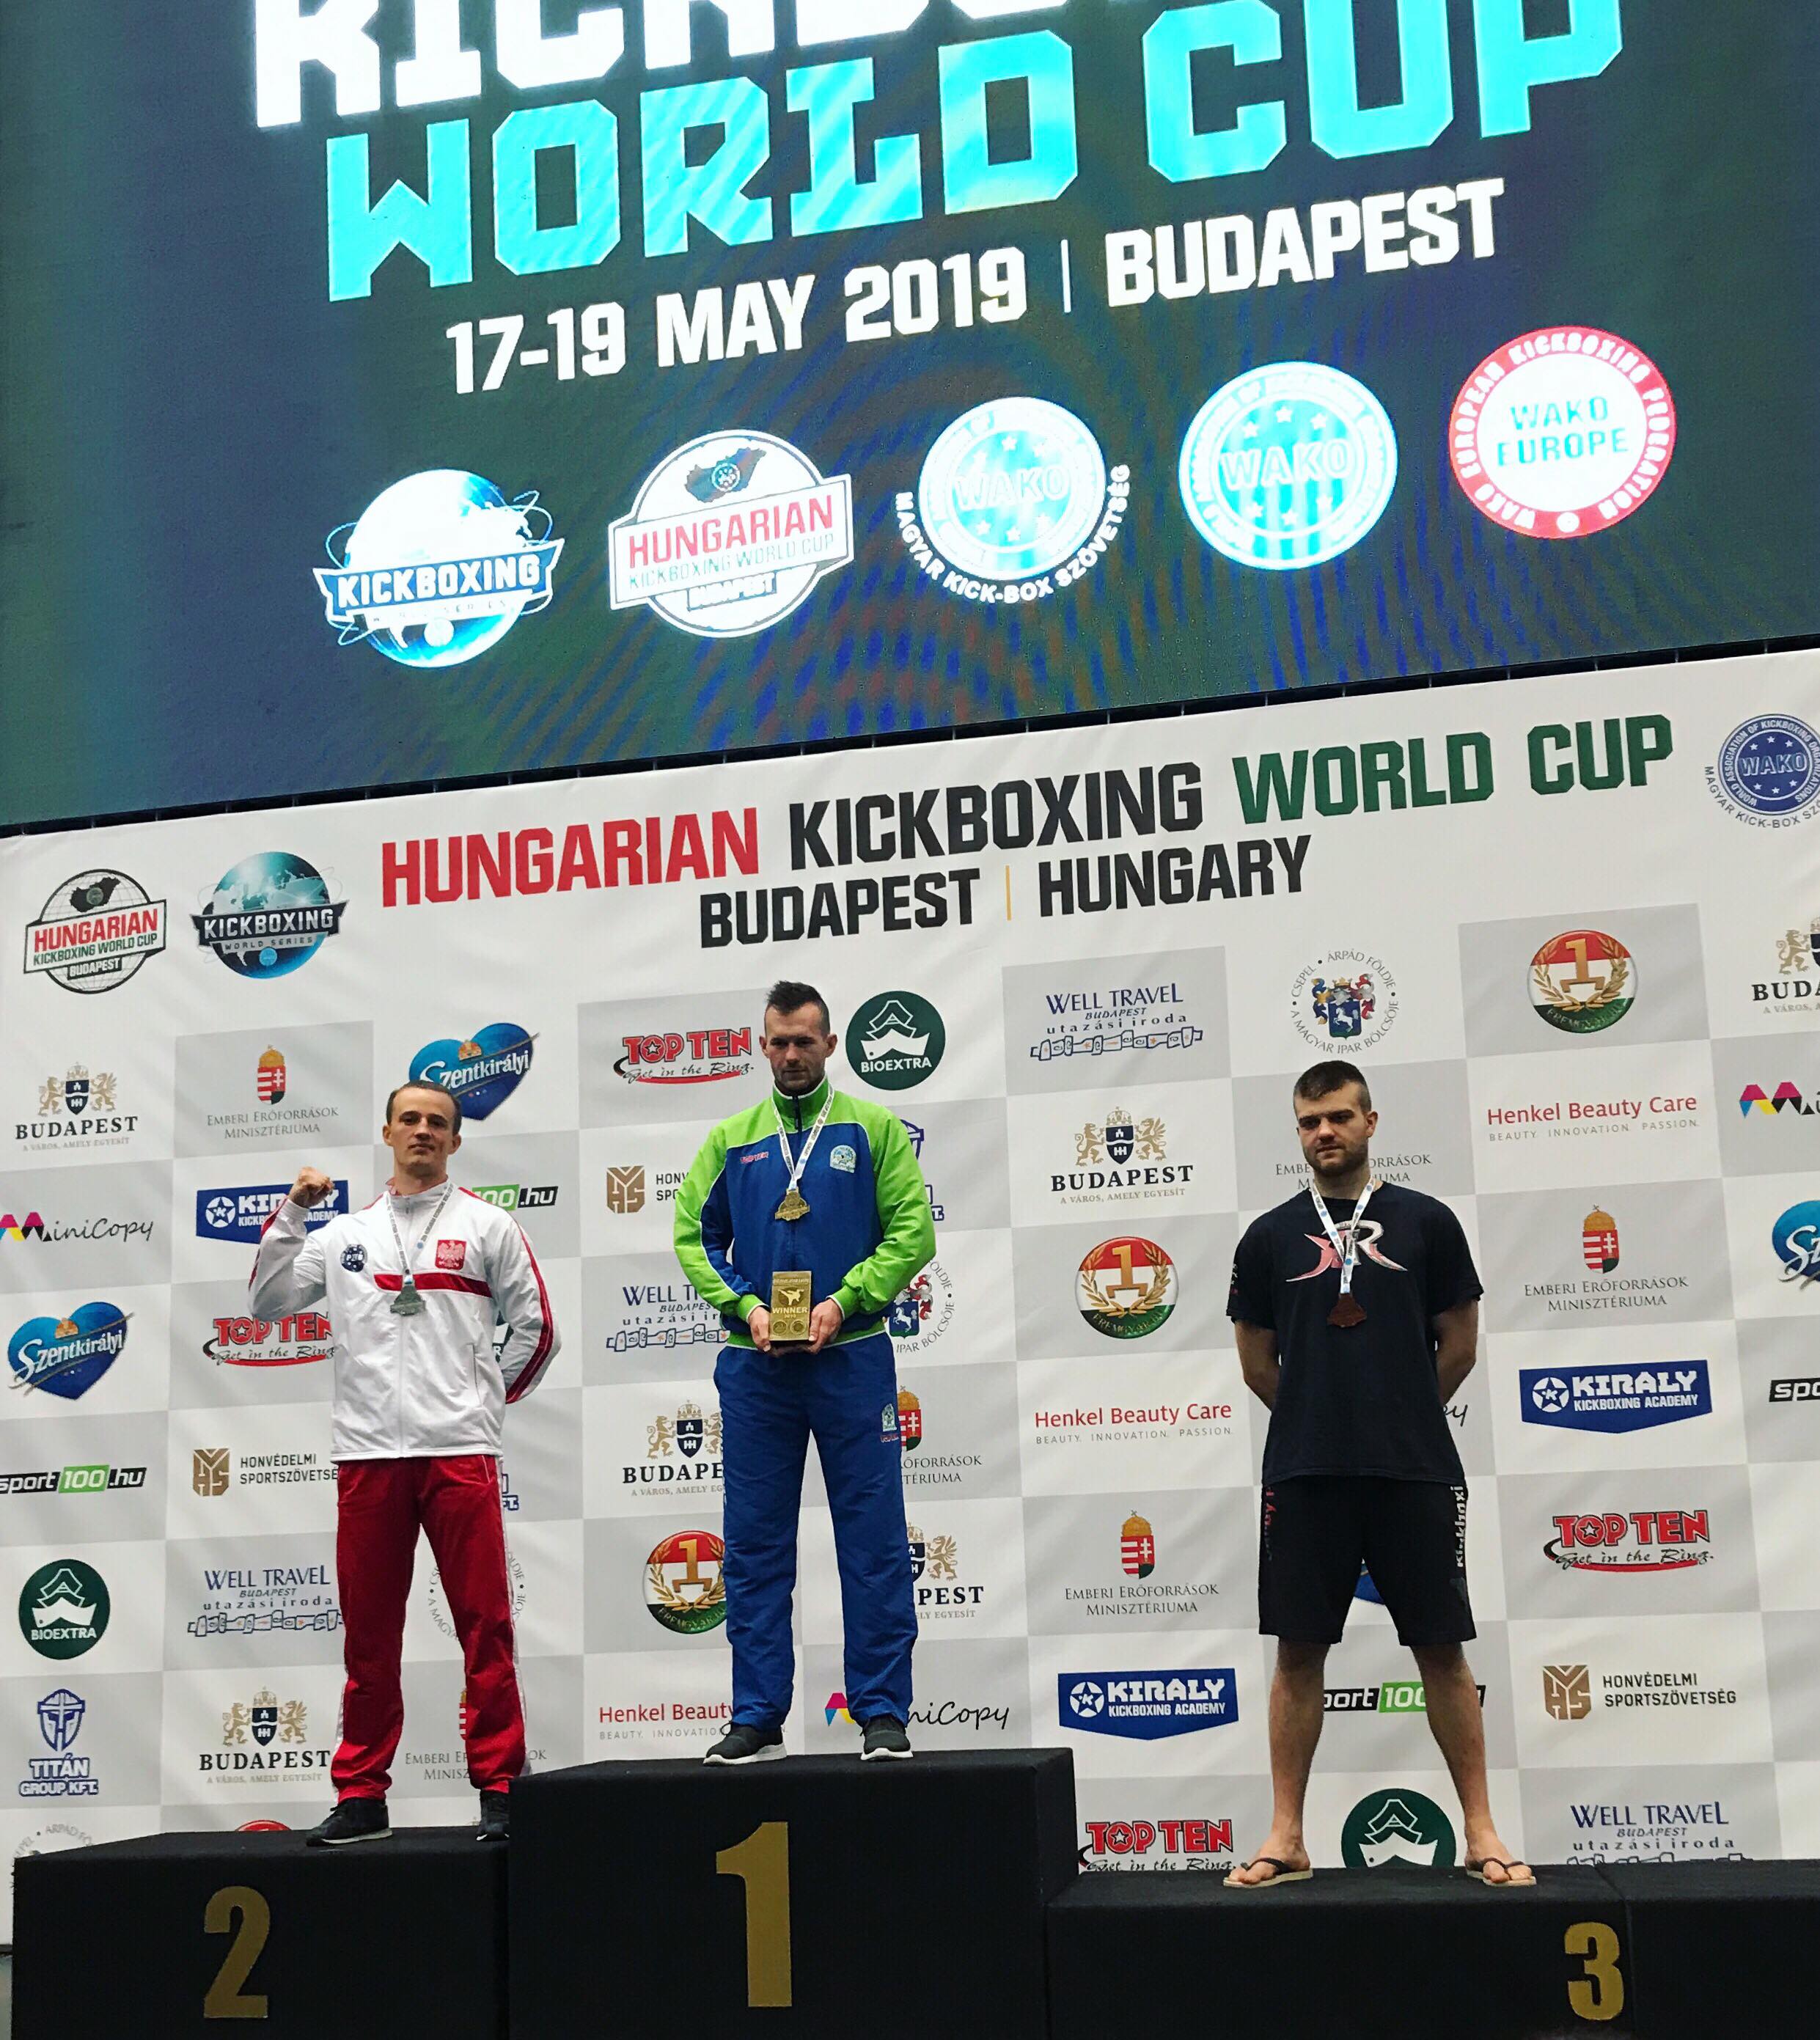 Jakub_Kalinowski-podium.jpg - 627.47 KB